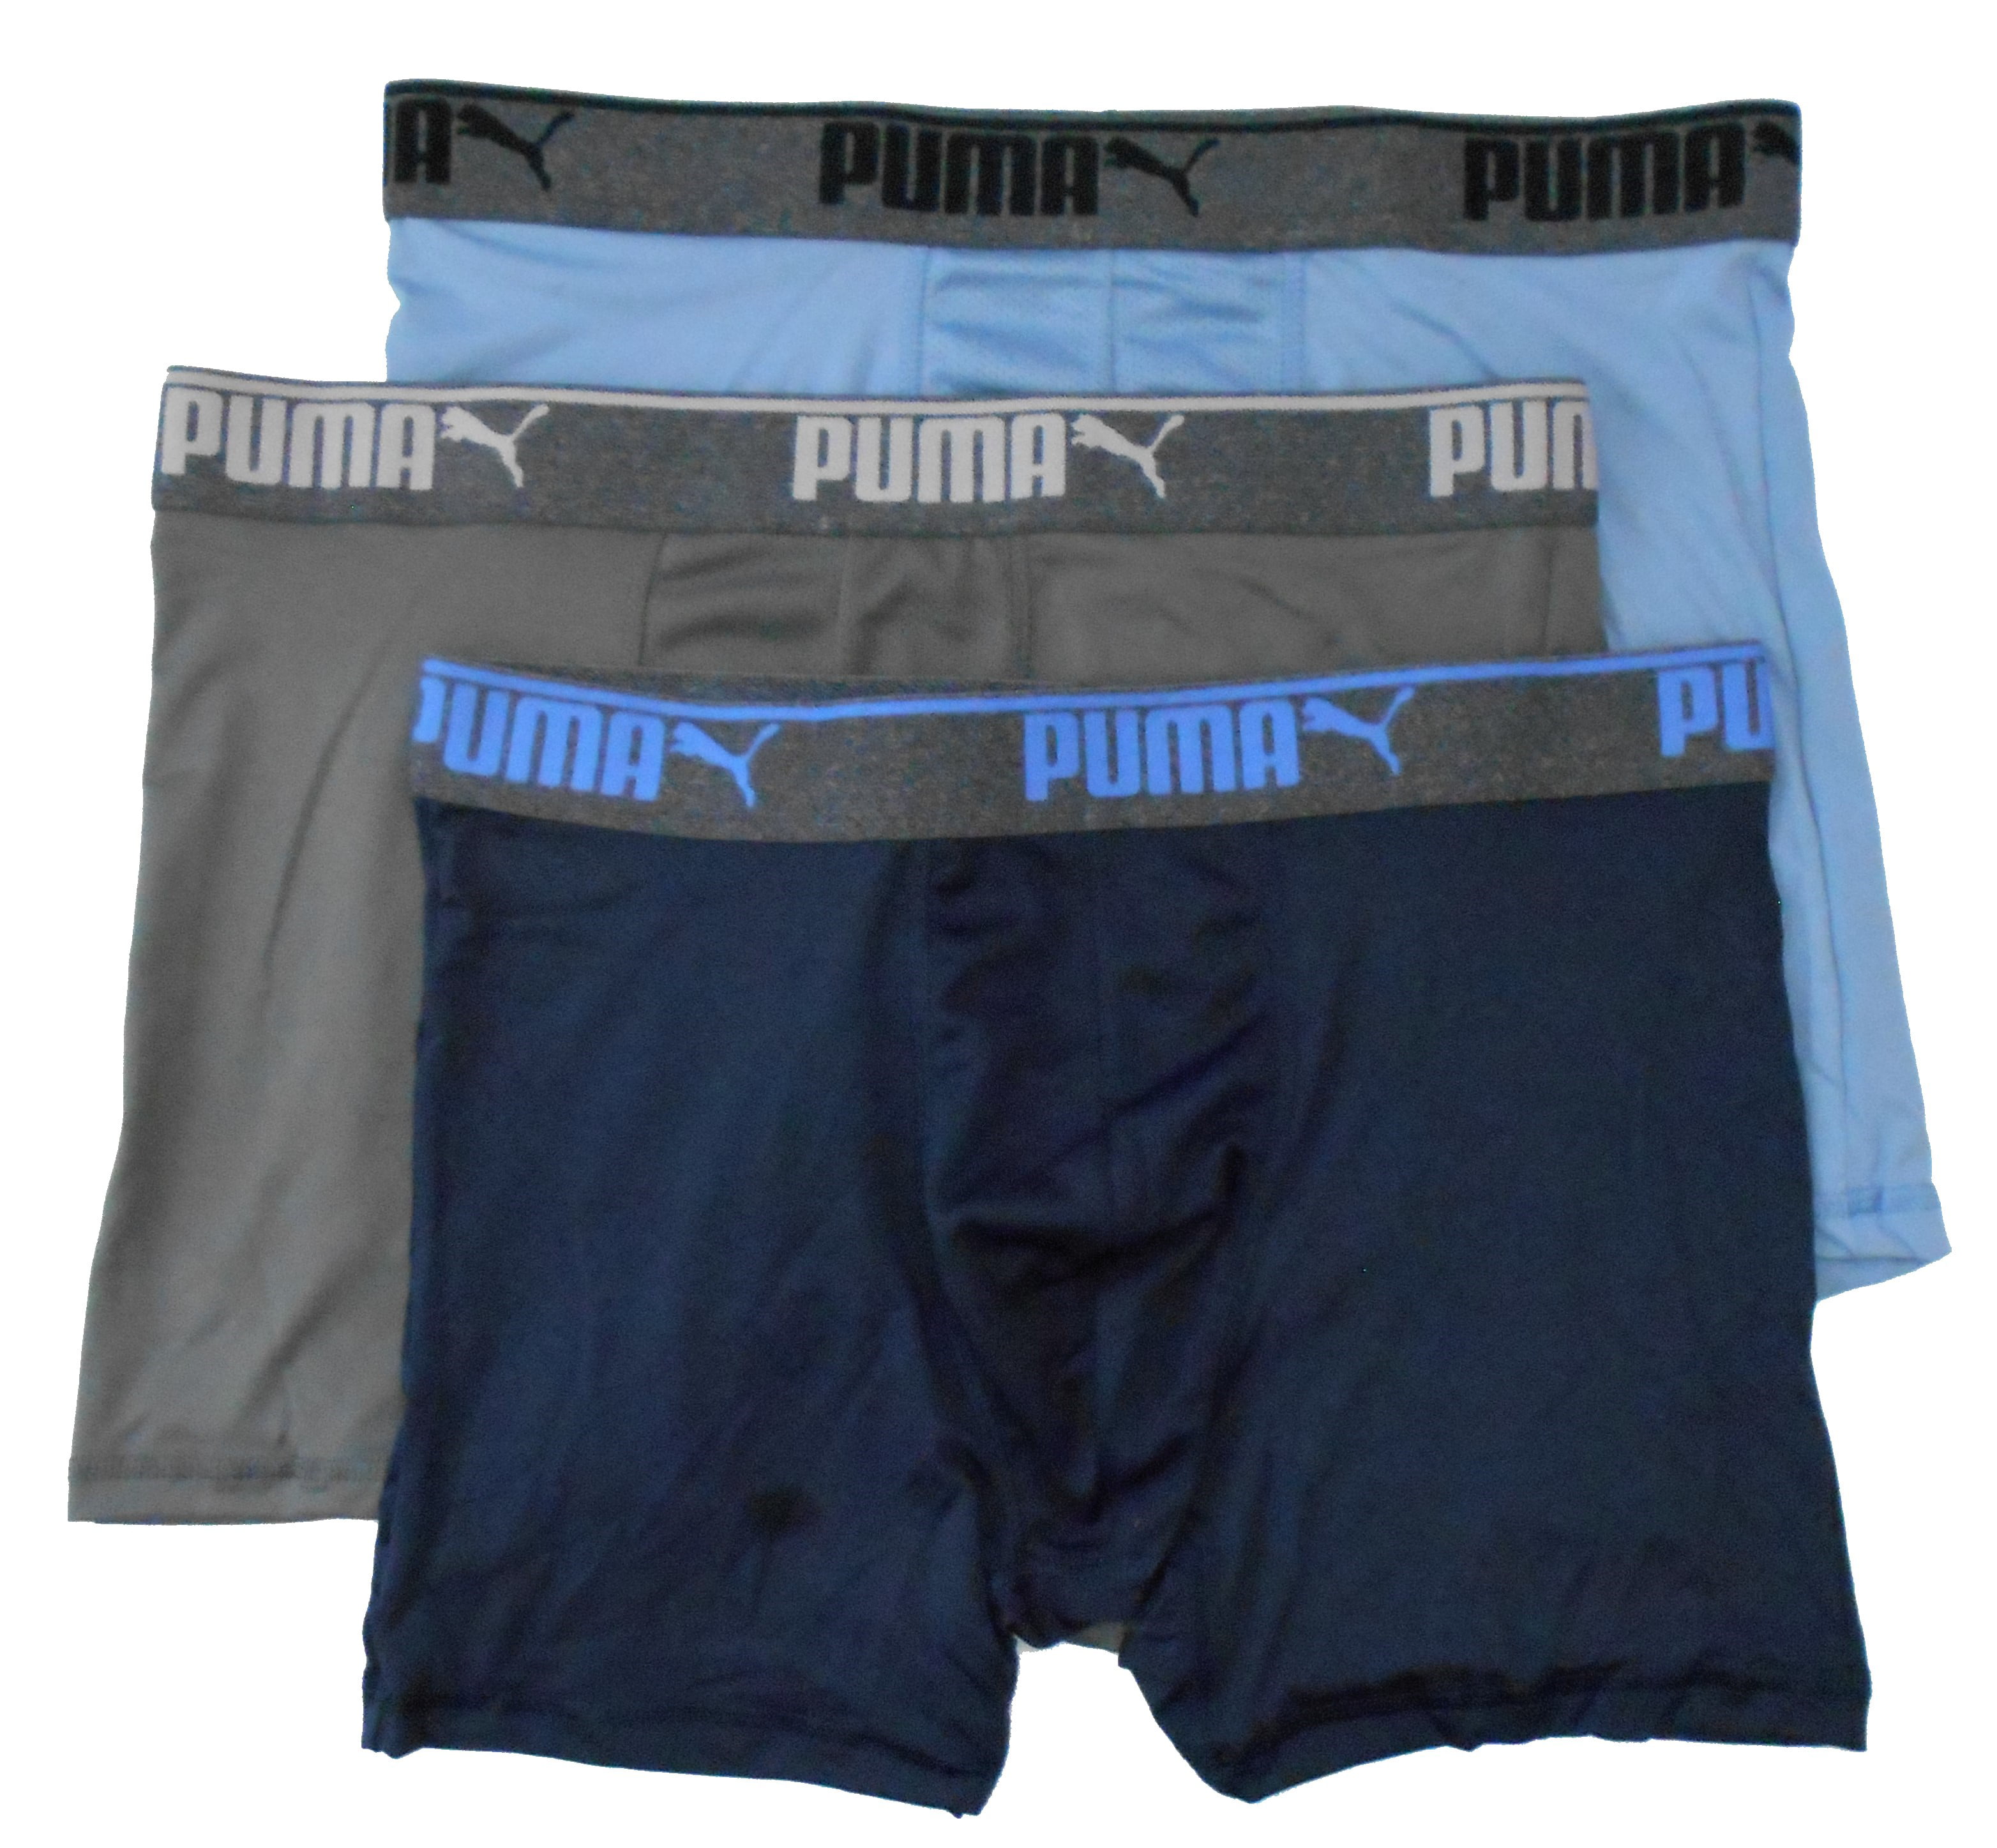 3-pack of puma men's boxer briefs